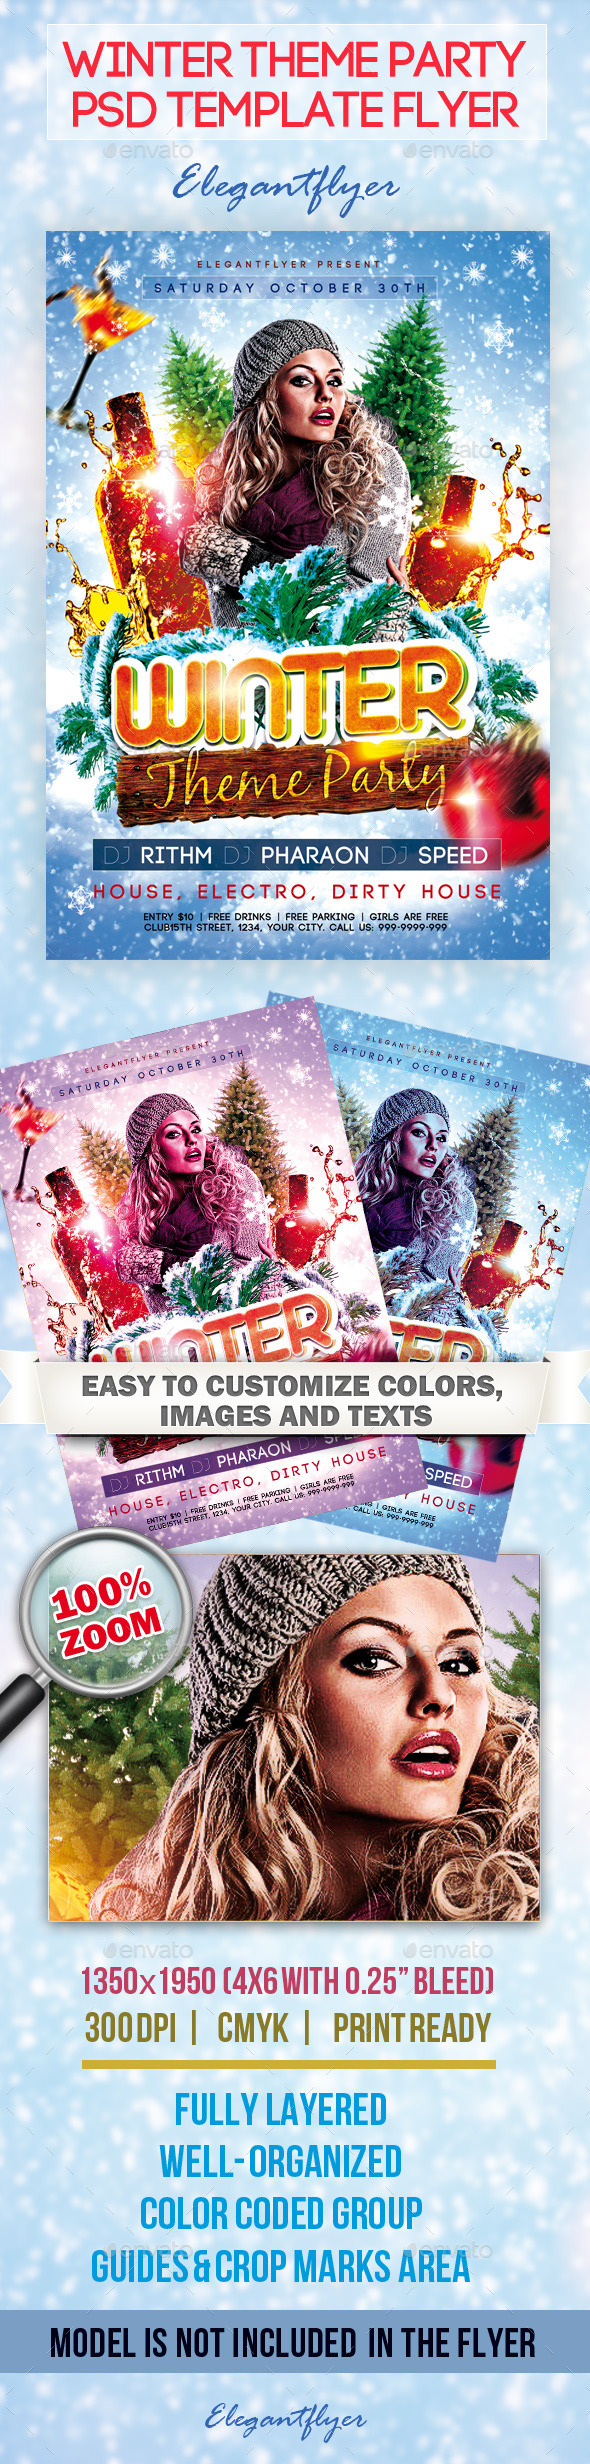 Free PSD  Winter design flyer template